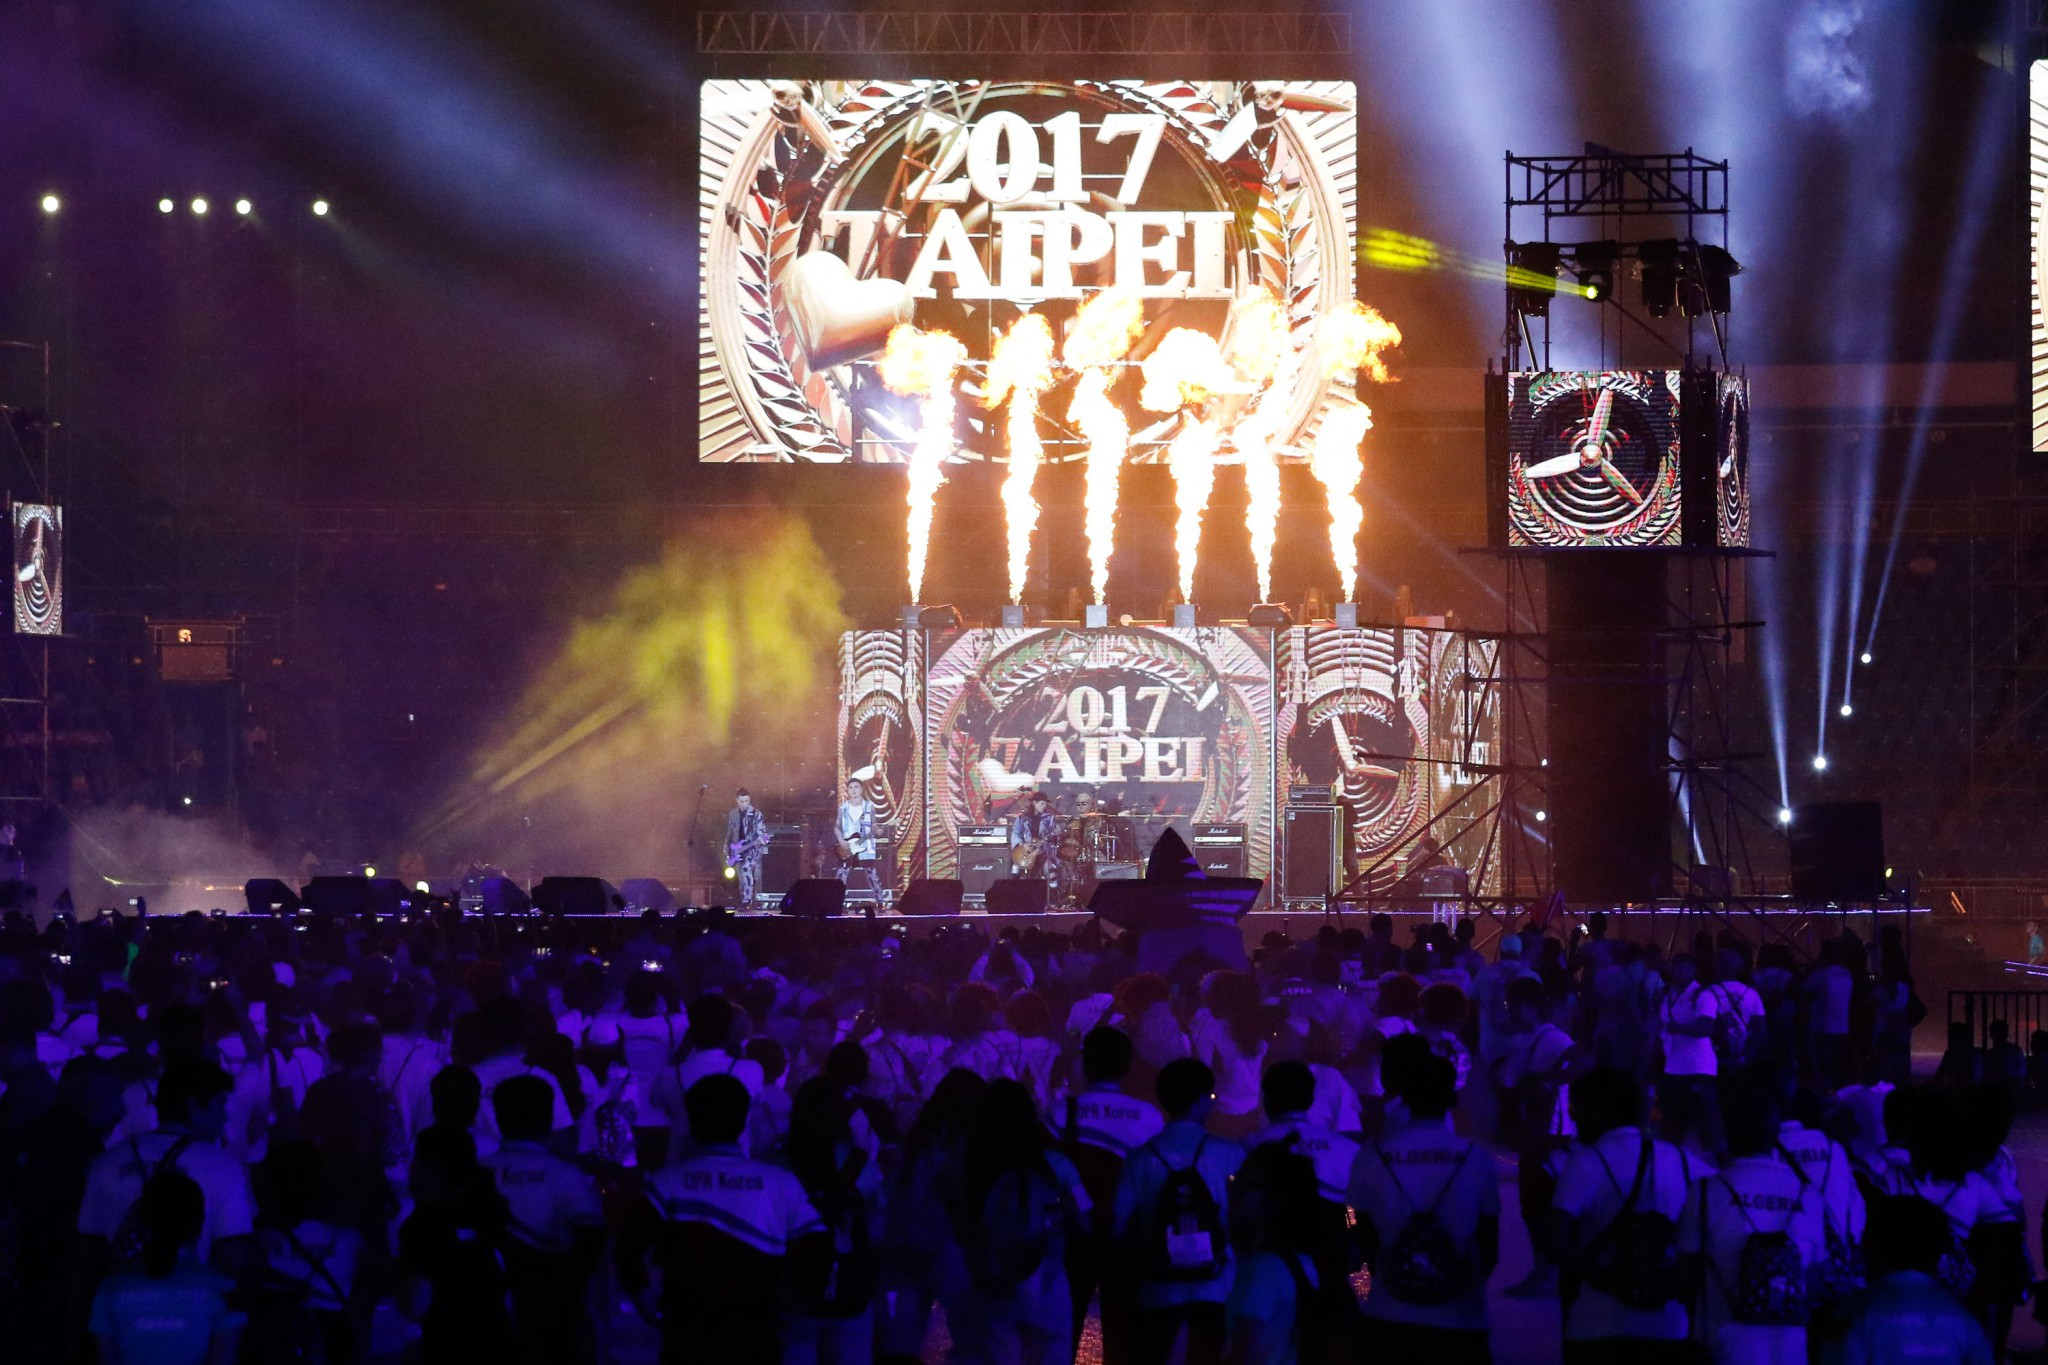 Acts were designed to reflect Taipei's flourishing live music scene ©Taipei 2017